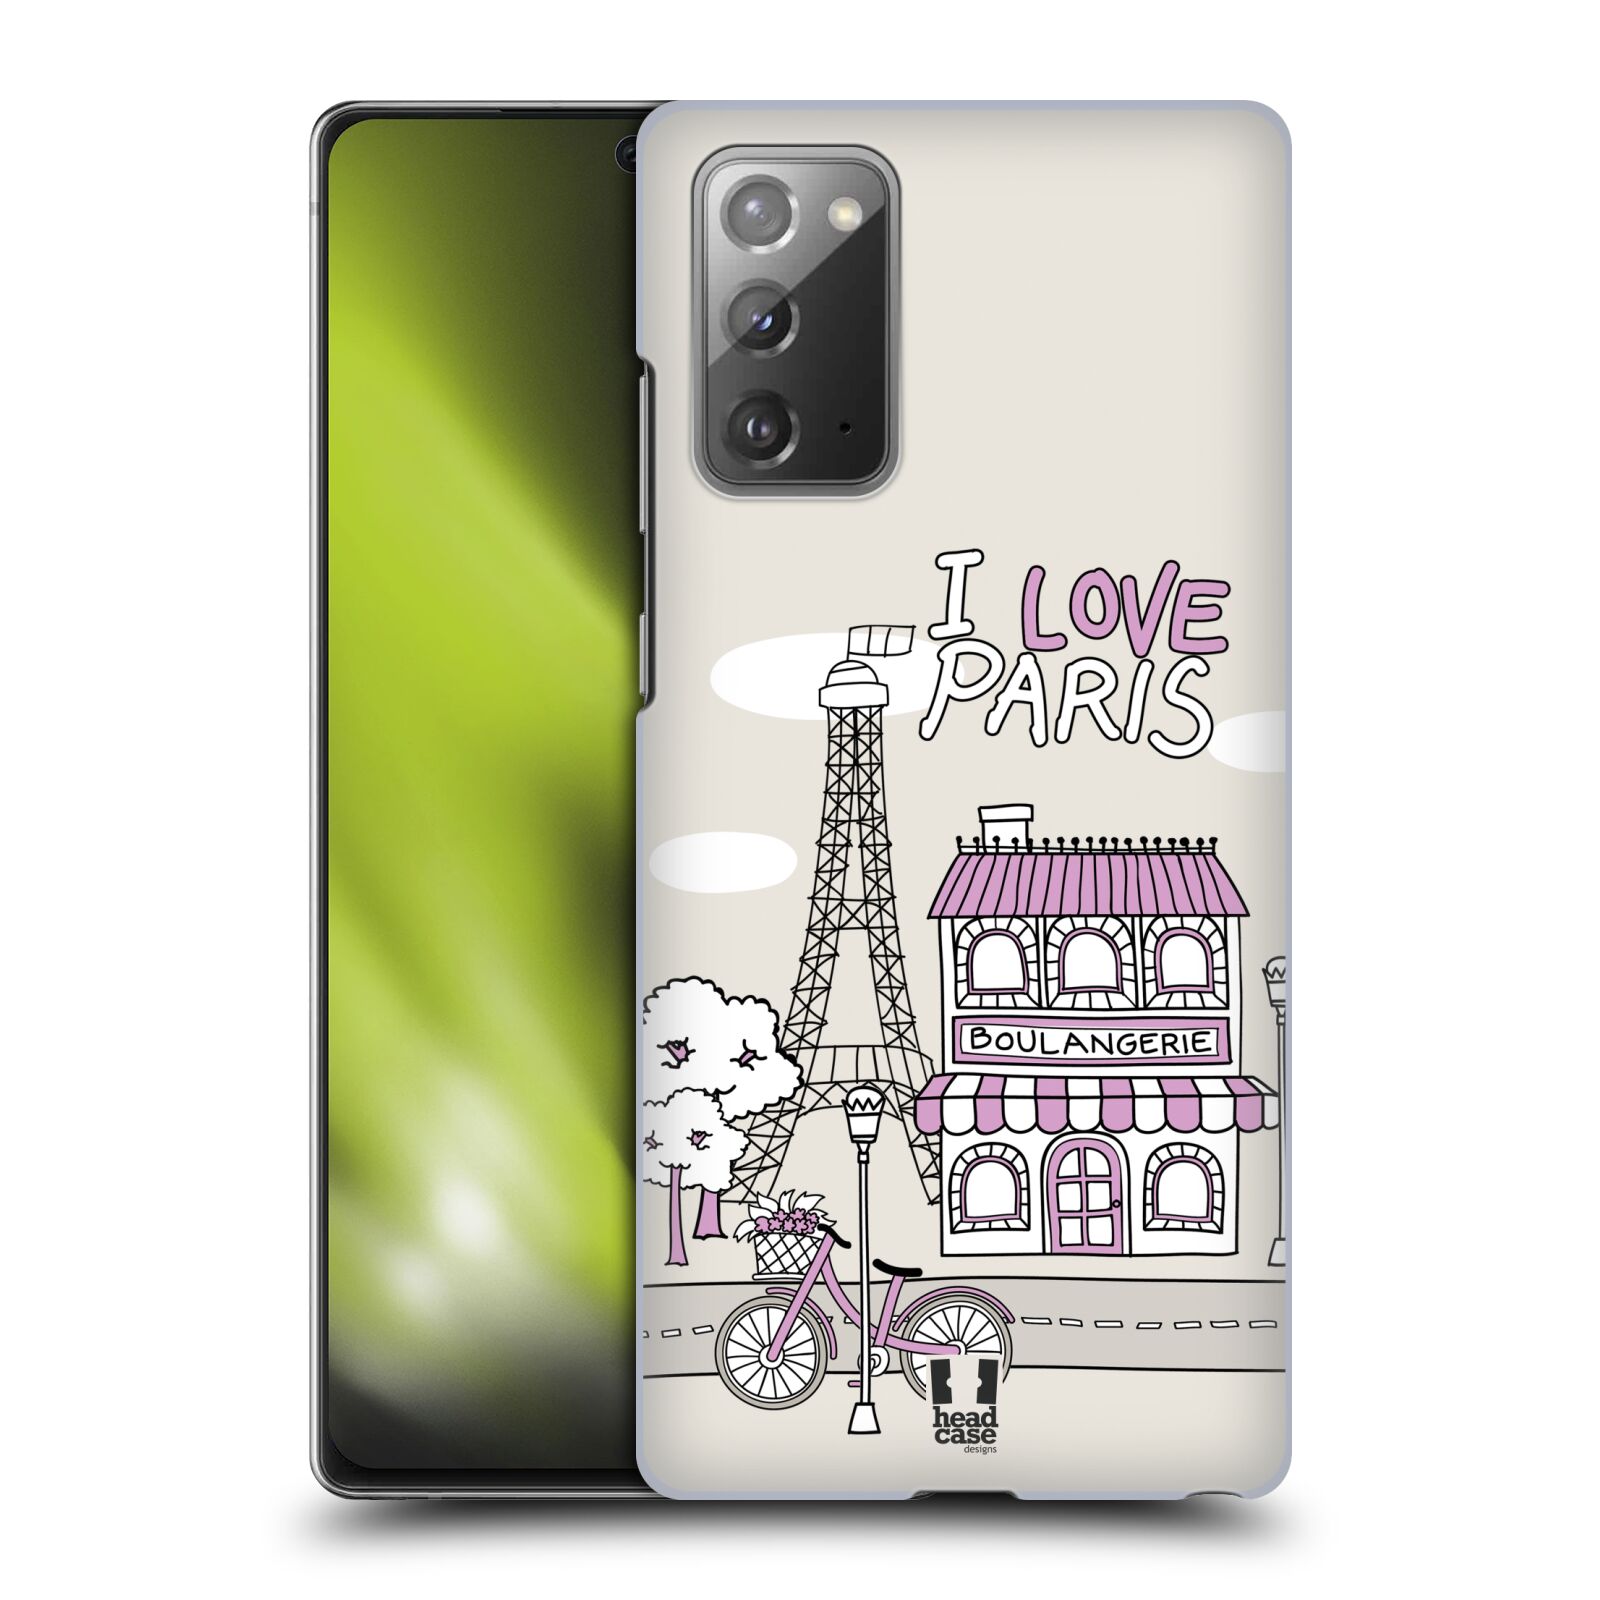 Plastový obal HEAD CASE na mobil Samsung Galaxy Note 20 vzor Kreslená městečka FIALOVÁ, Paříž, Francie, I LOVE PARIS